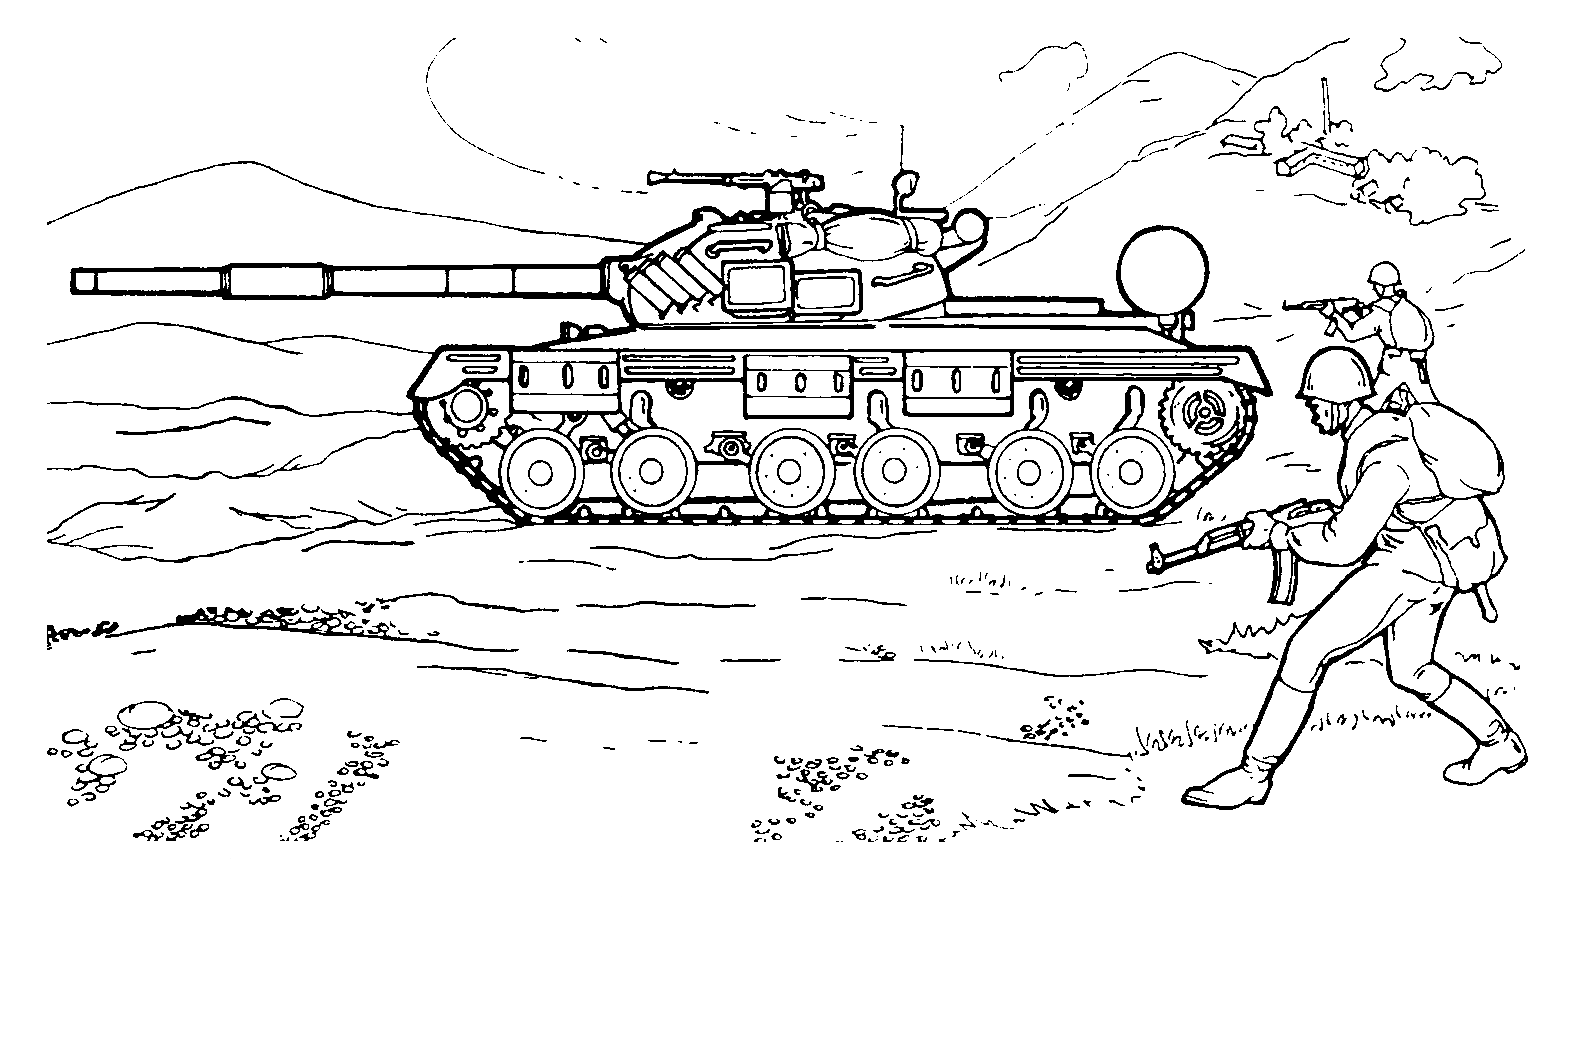 Coloring page - Soviet tank on maneuvers